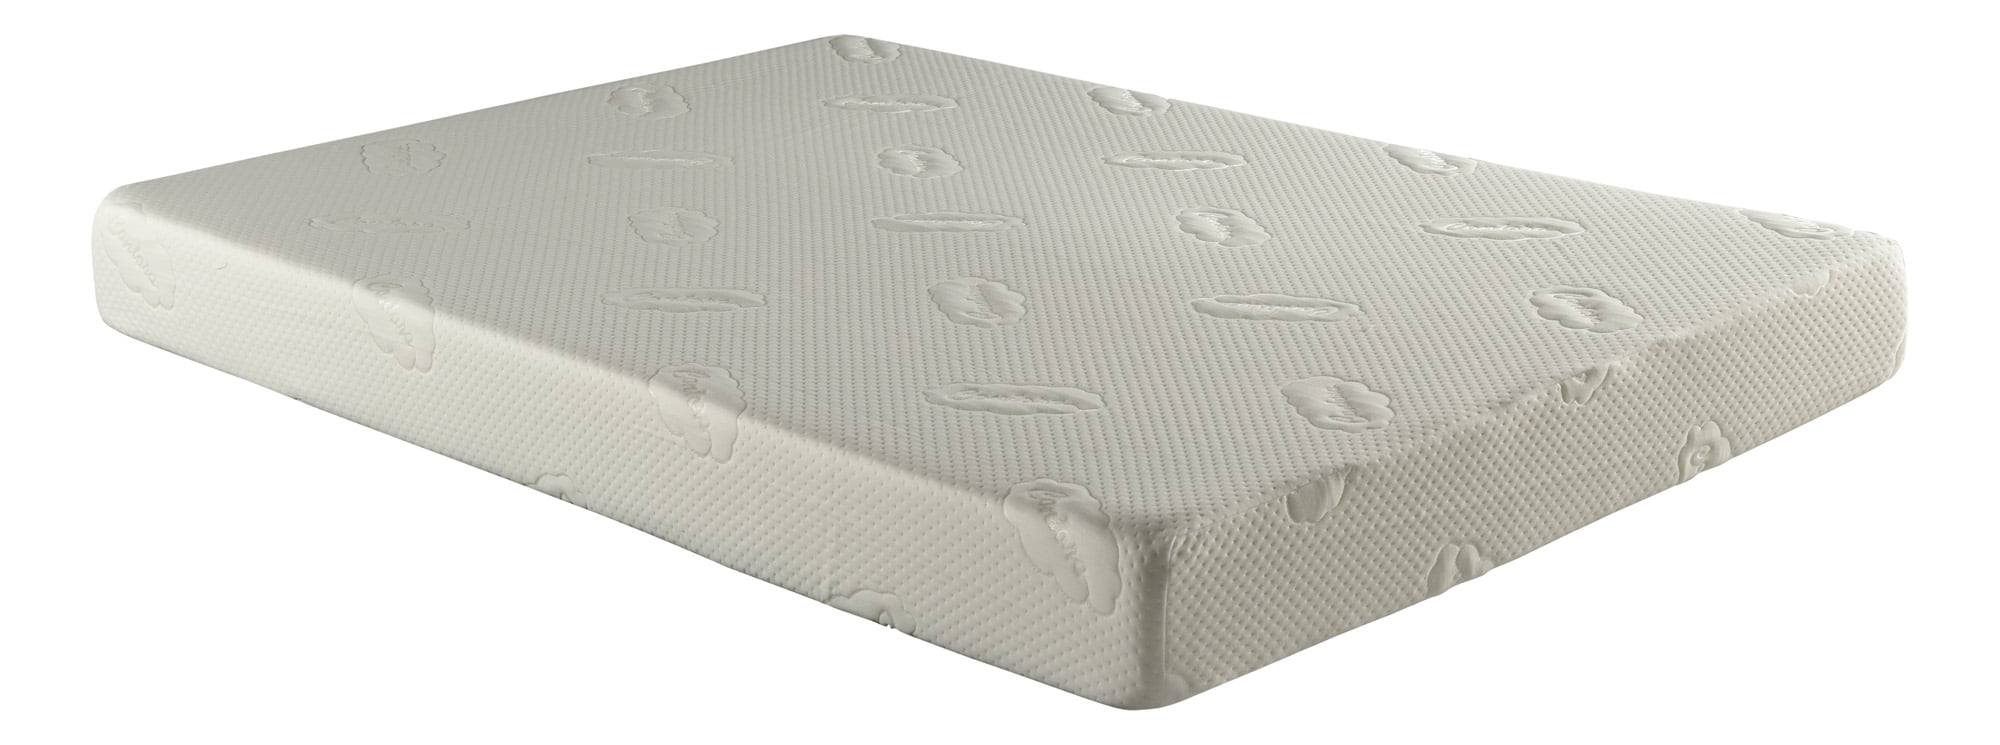 easy rest memory foam mattress reviews